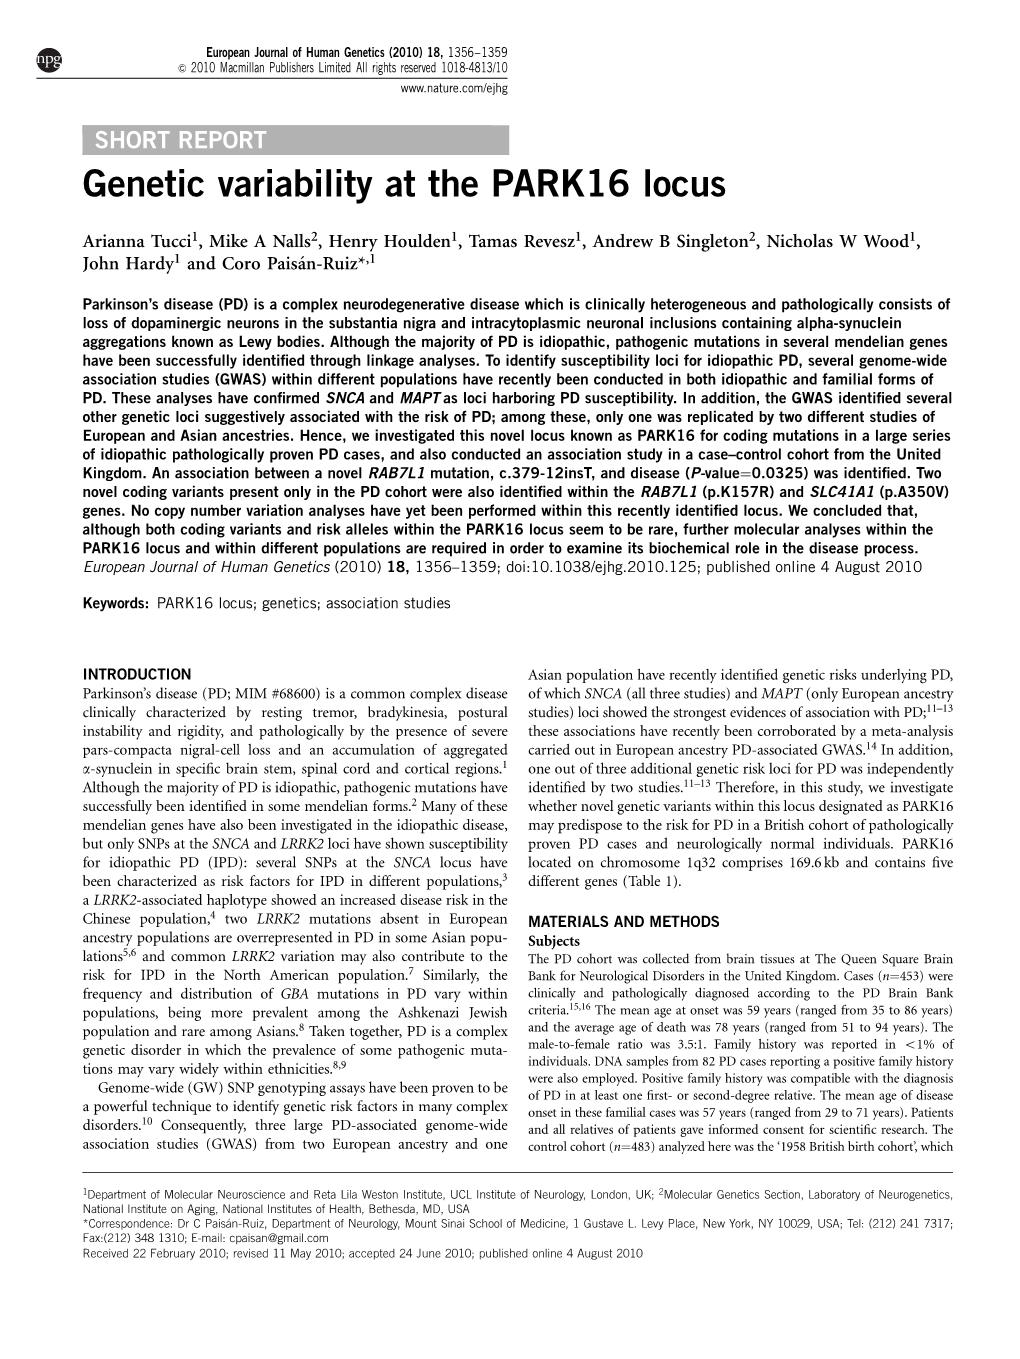 Genetic Variability at the PARK16 Locus